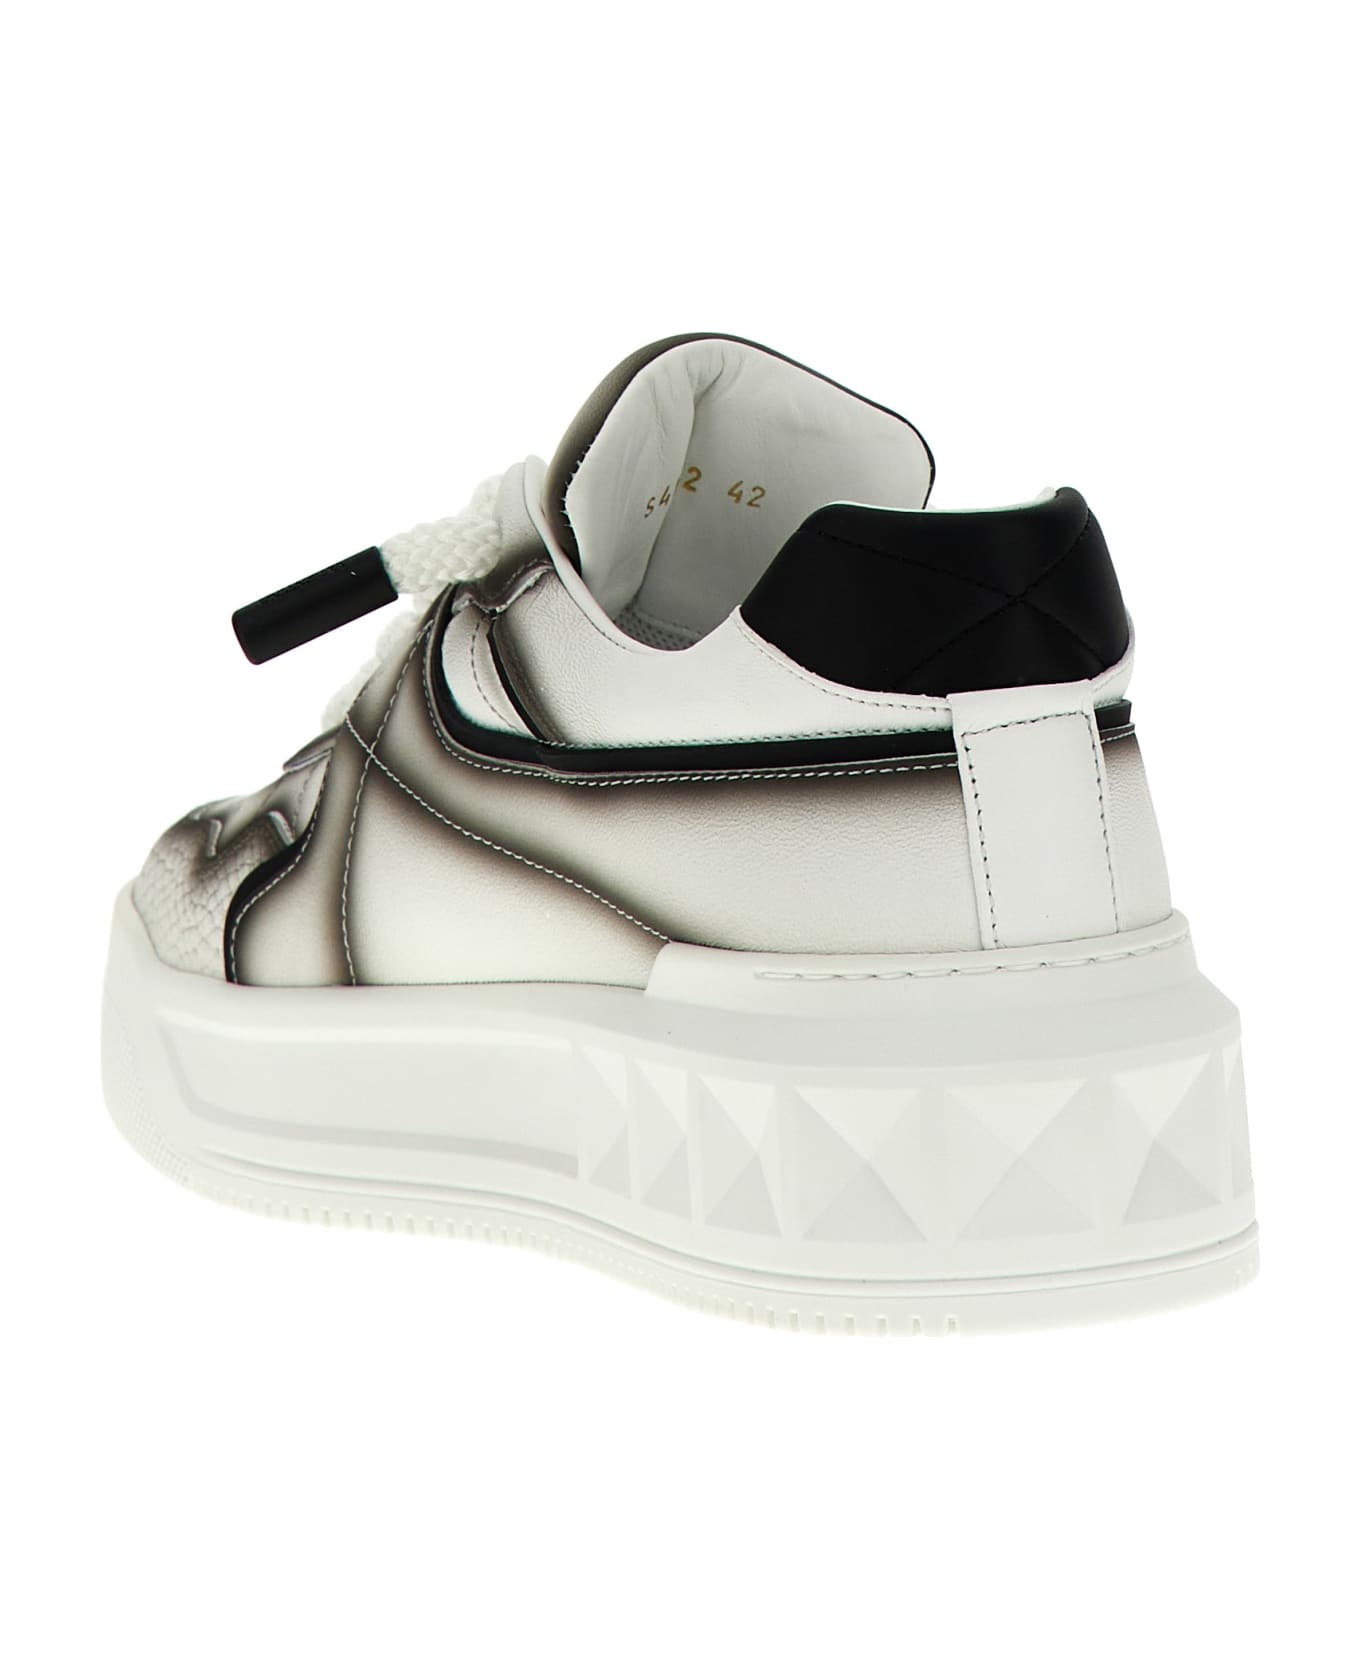 Valentino Garavani 'one Stud Xl' Sneakers - White/Black スニーカー